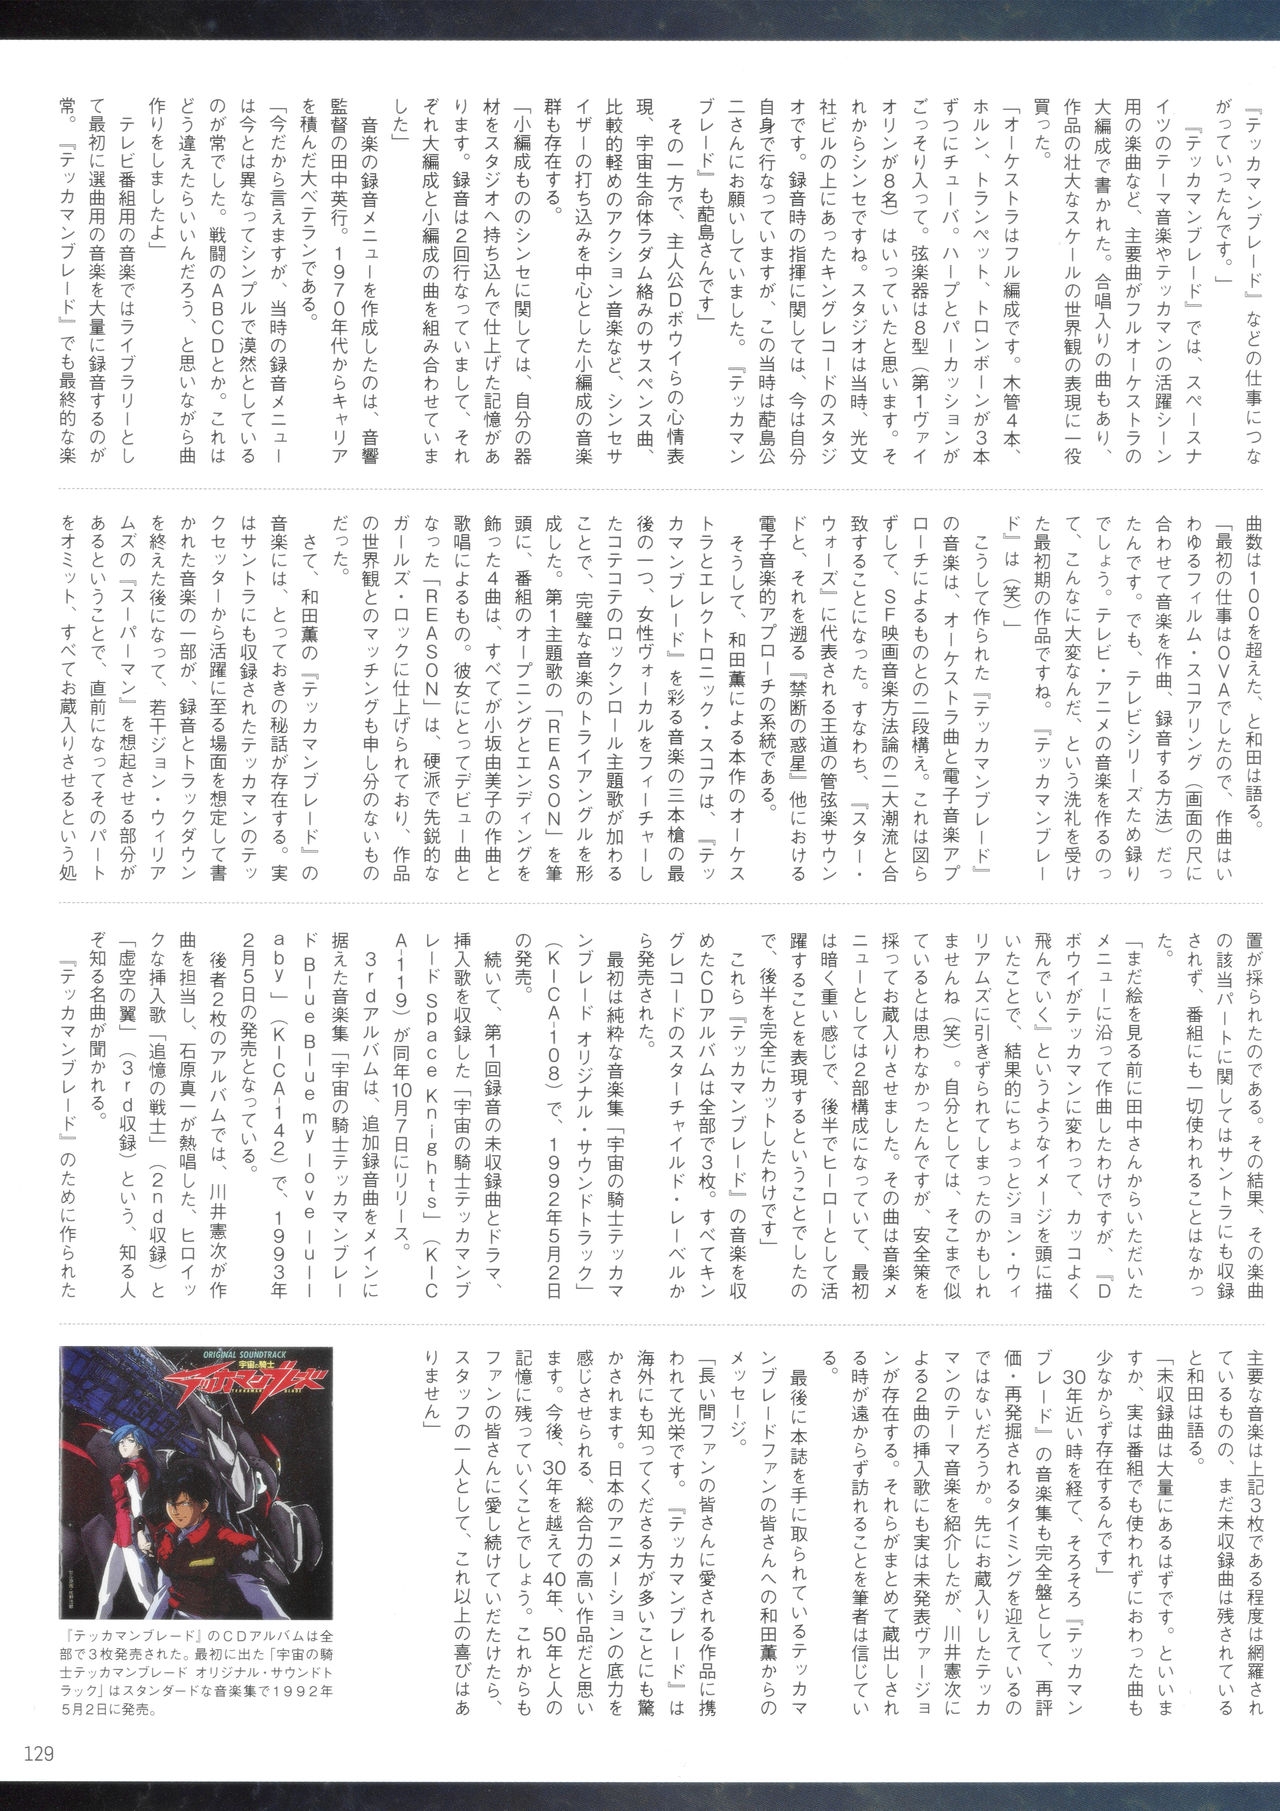 Entertainment Archive Uchuu no Kishi Tekkaman Blade 127